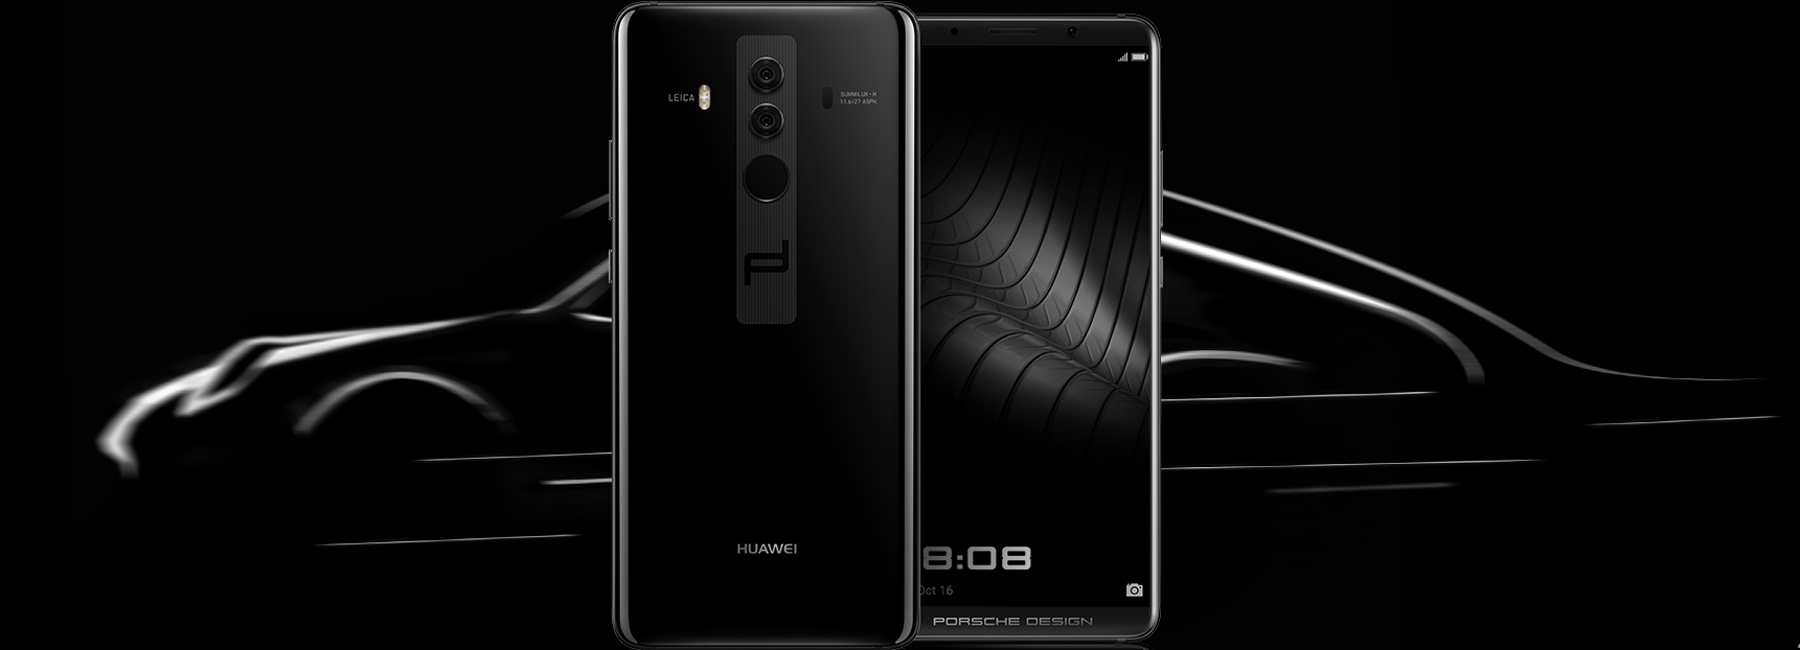 Huawei Mate 10 yine Porsche Design